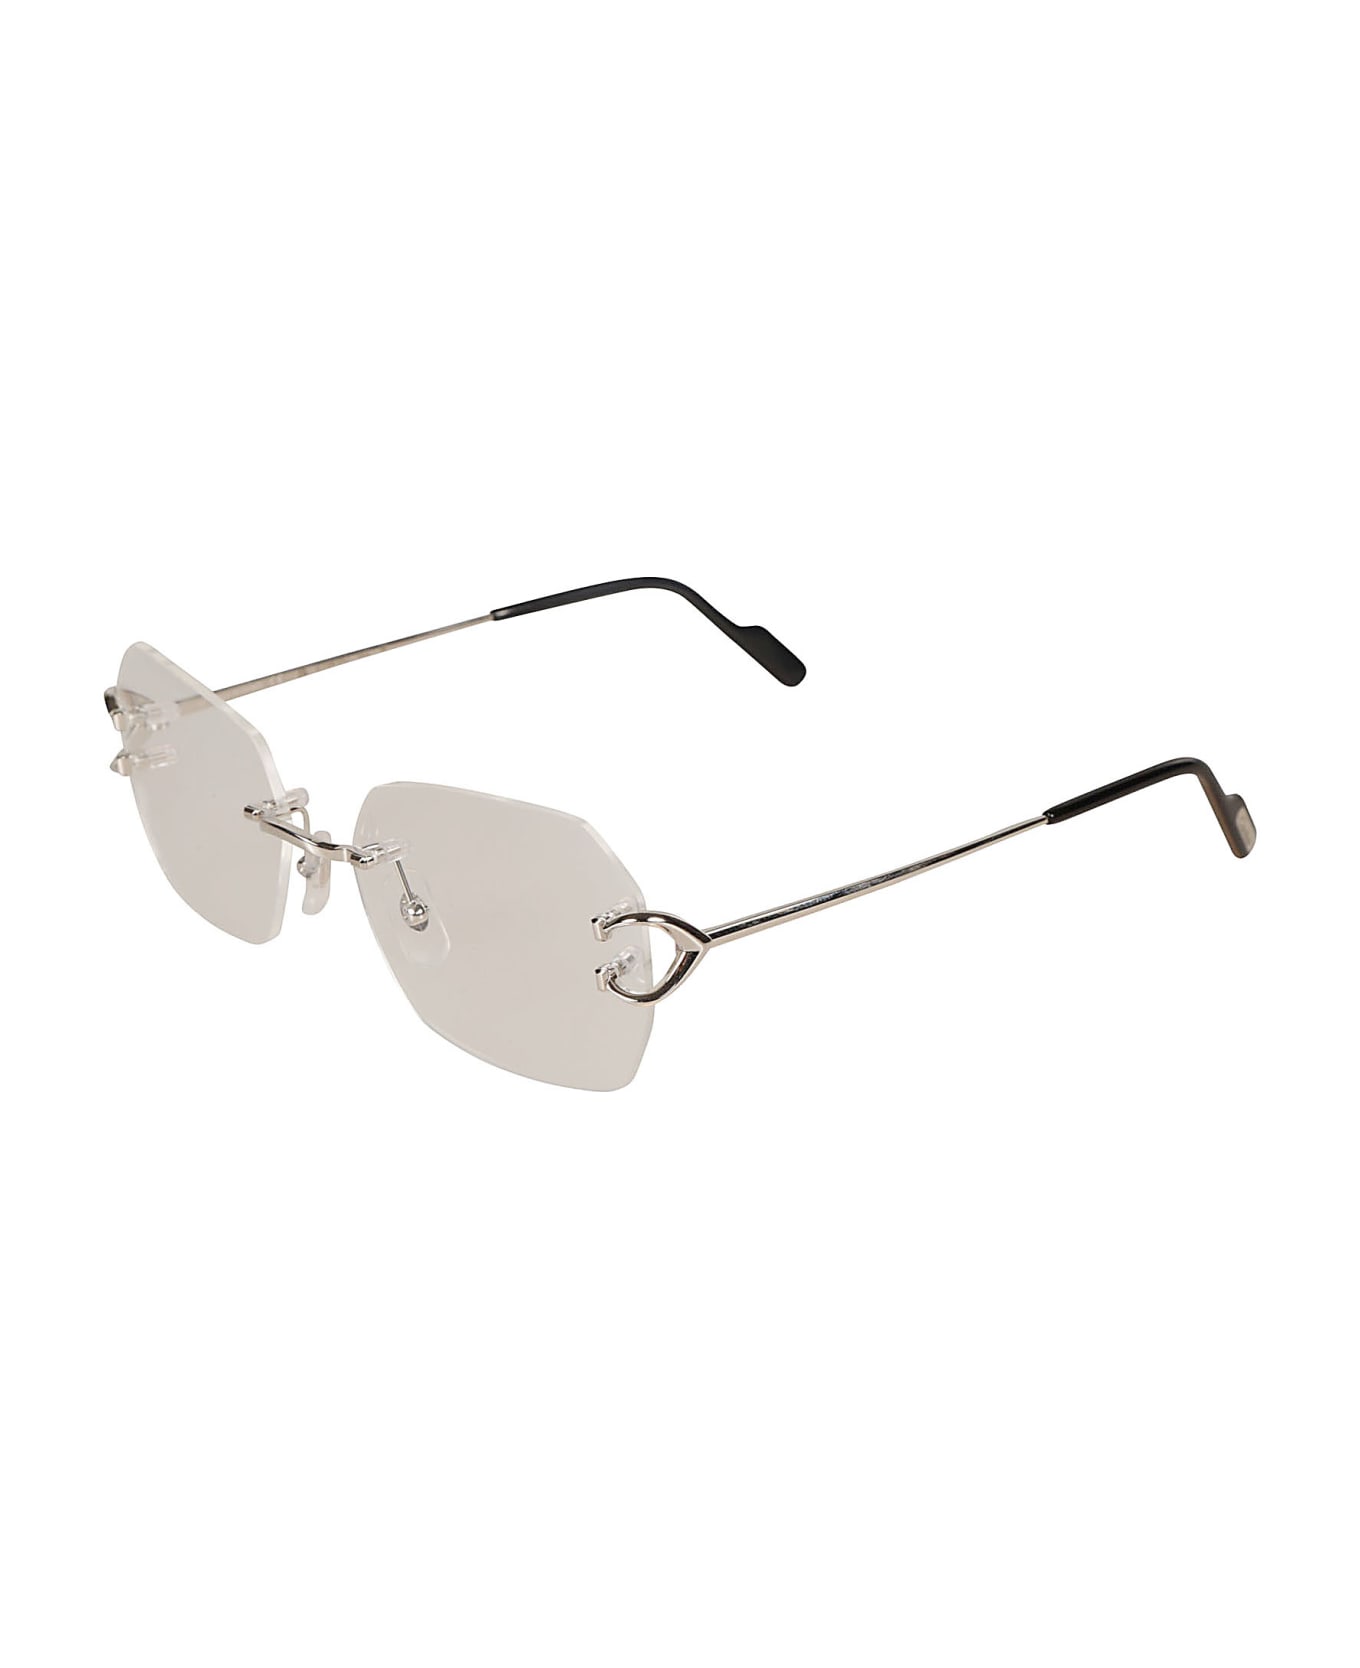 Cartier Eyewear Square Frame Glasses - Silver アイウェア